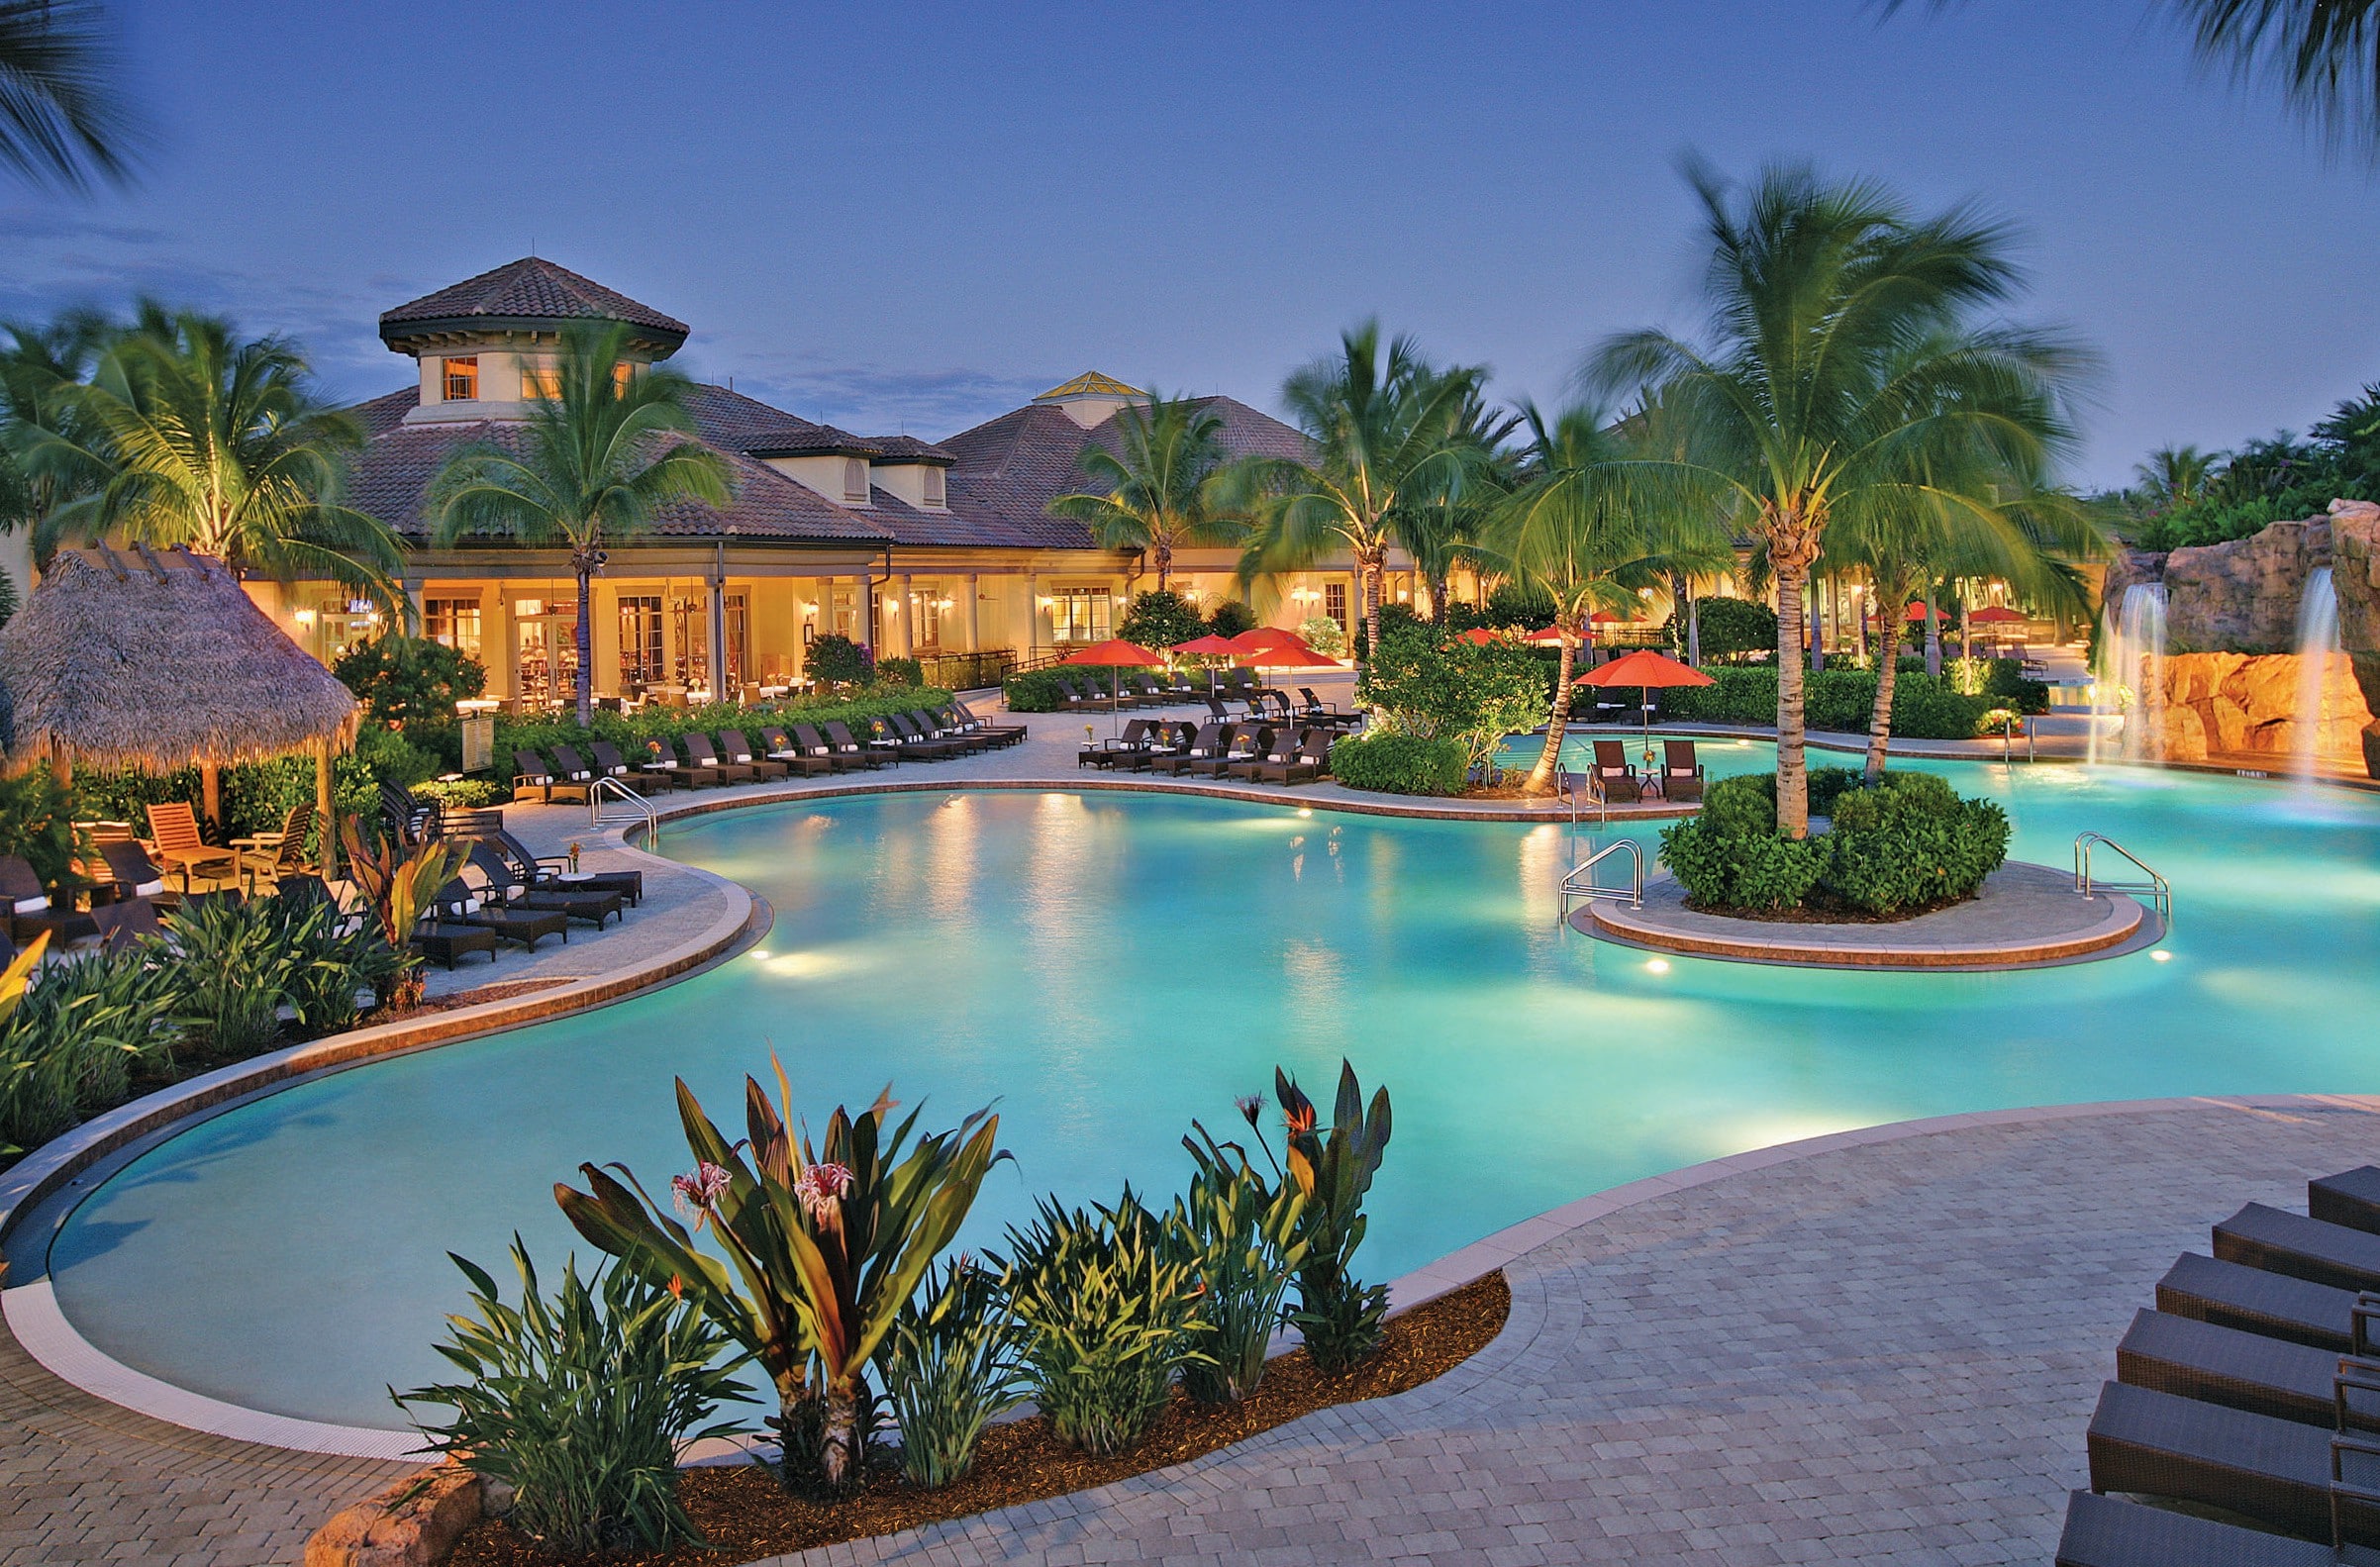 Lely Resort Gulf Coast Florida Homes